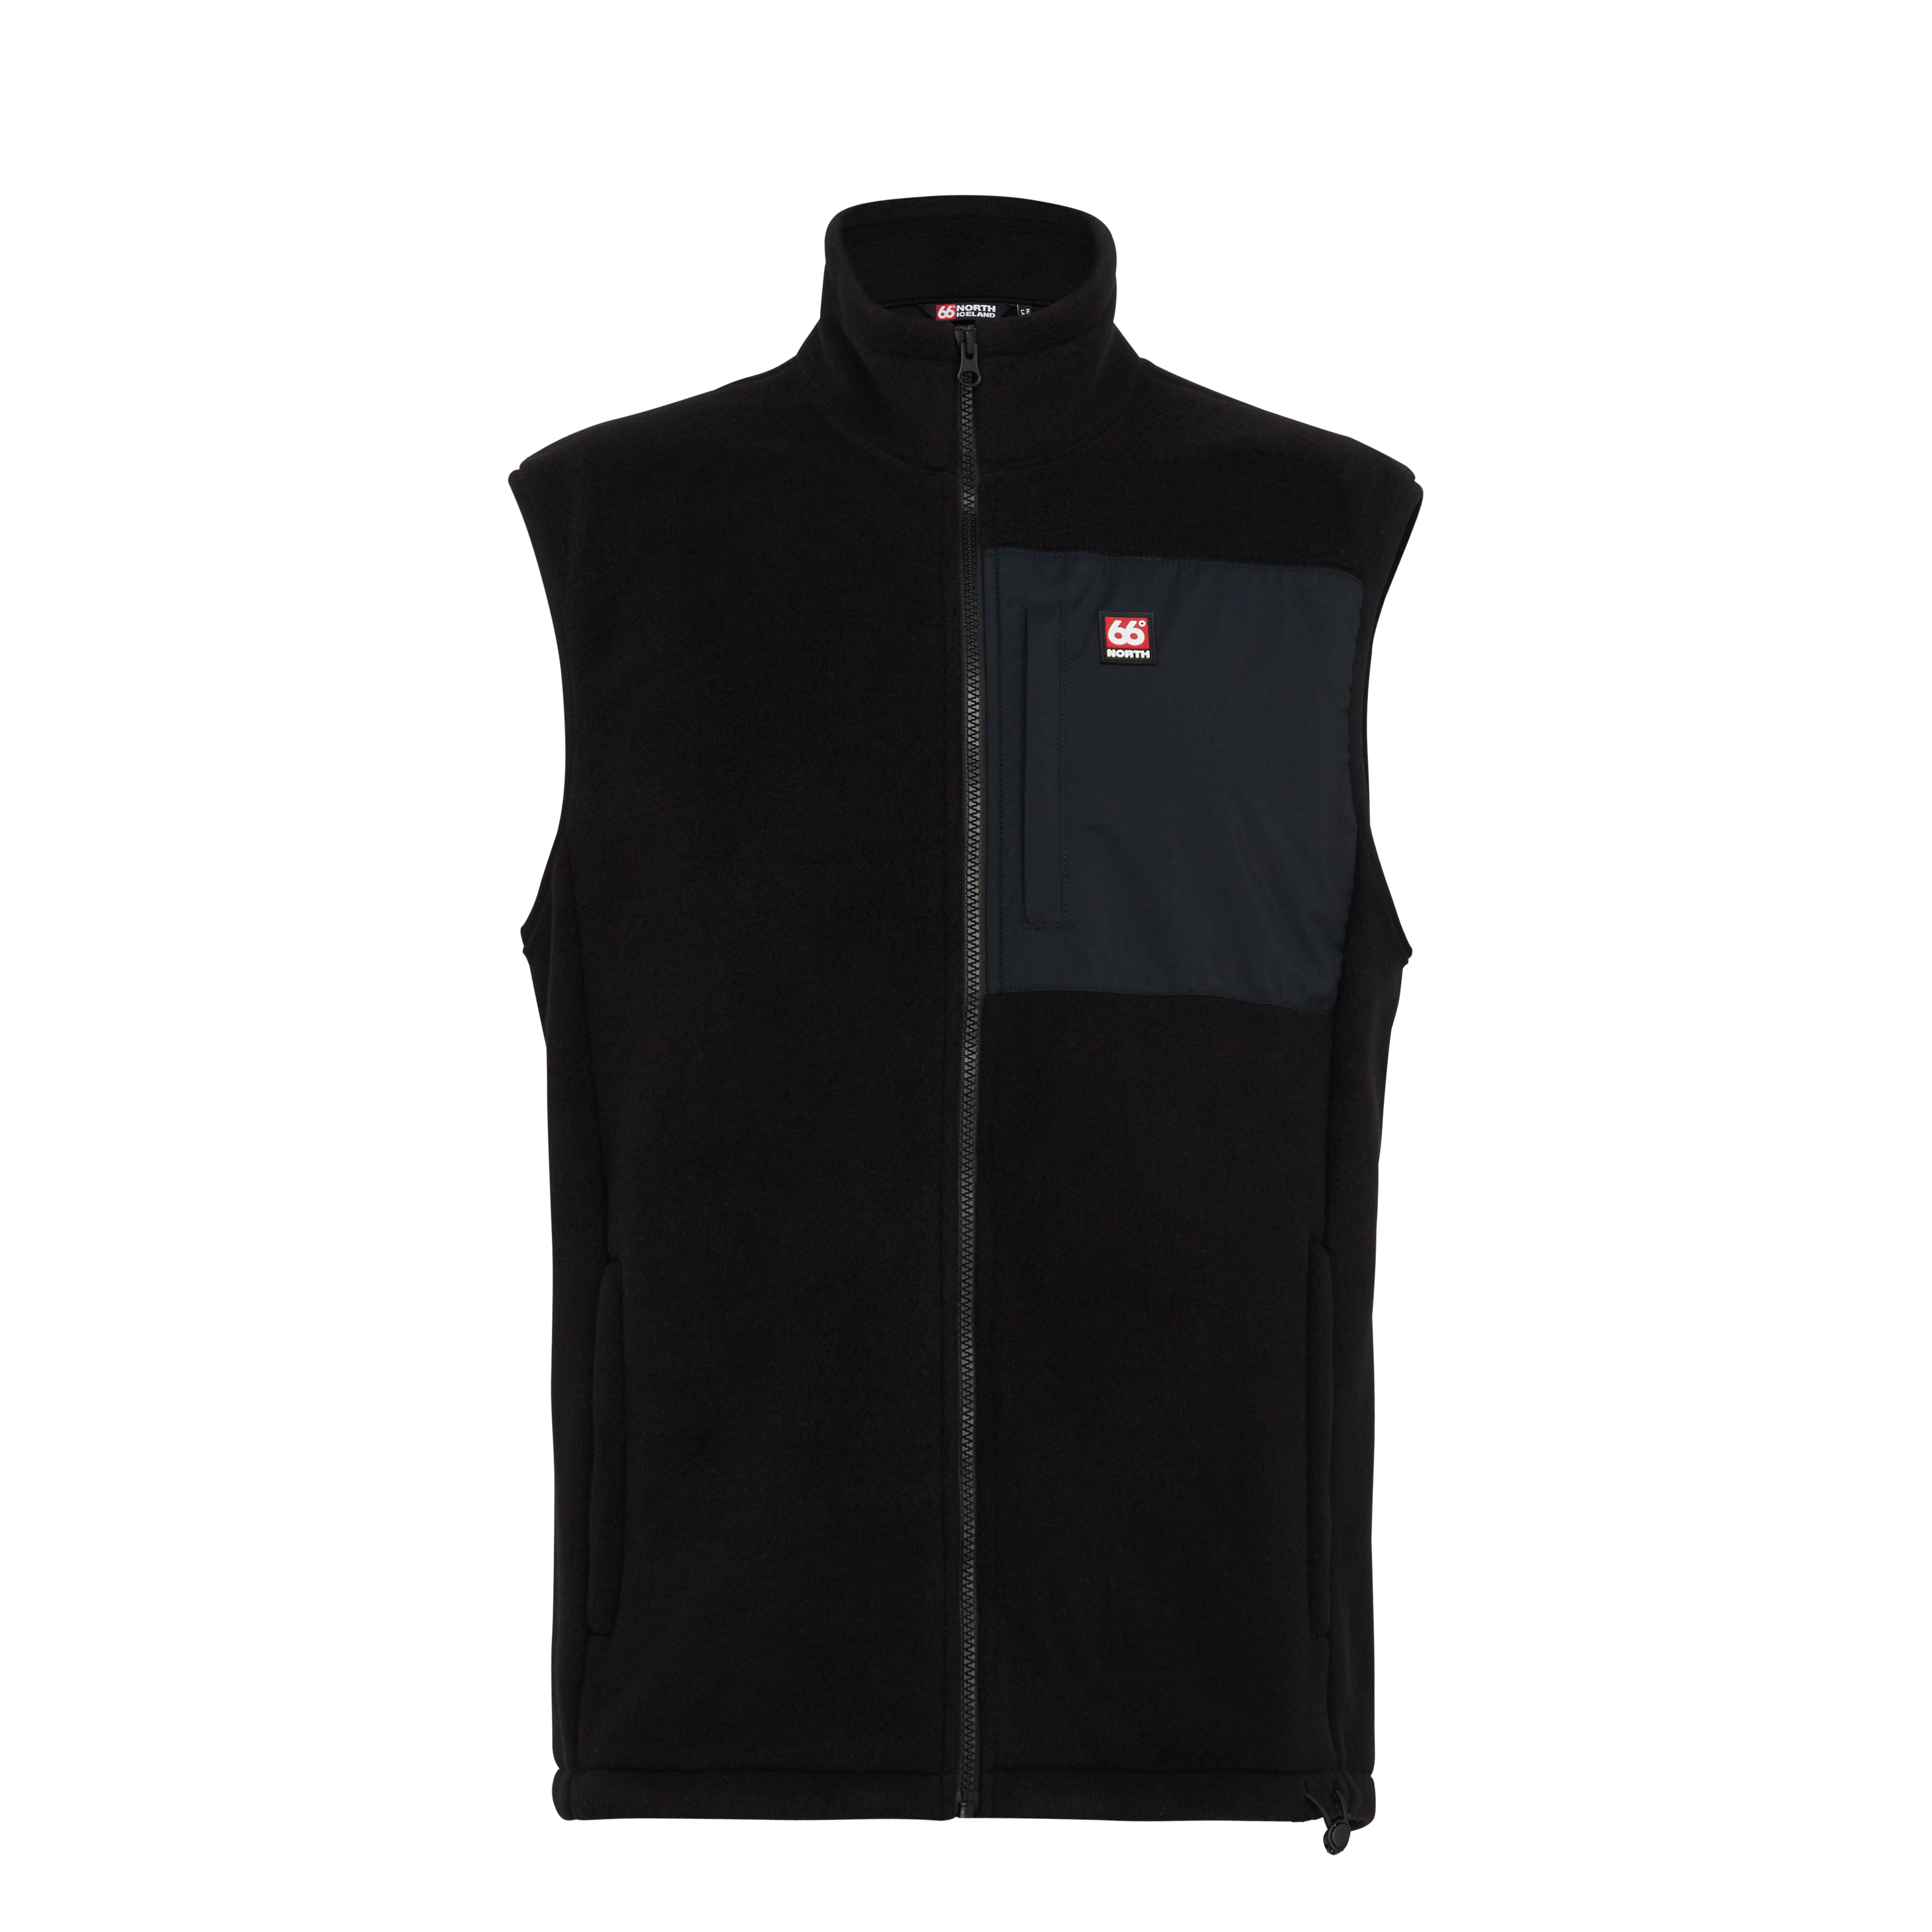 66 North Men's Esja Jackets & Coats